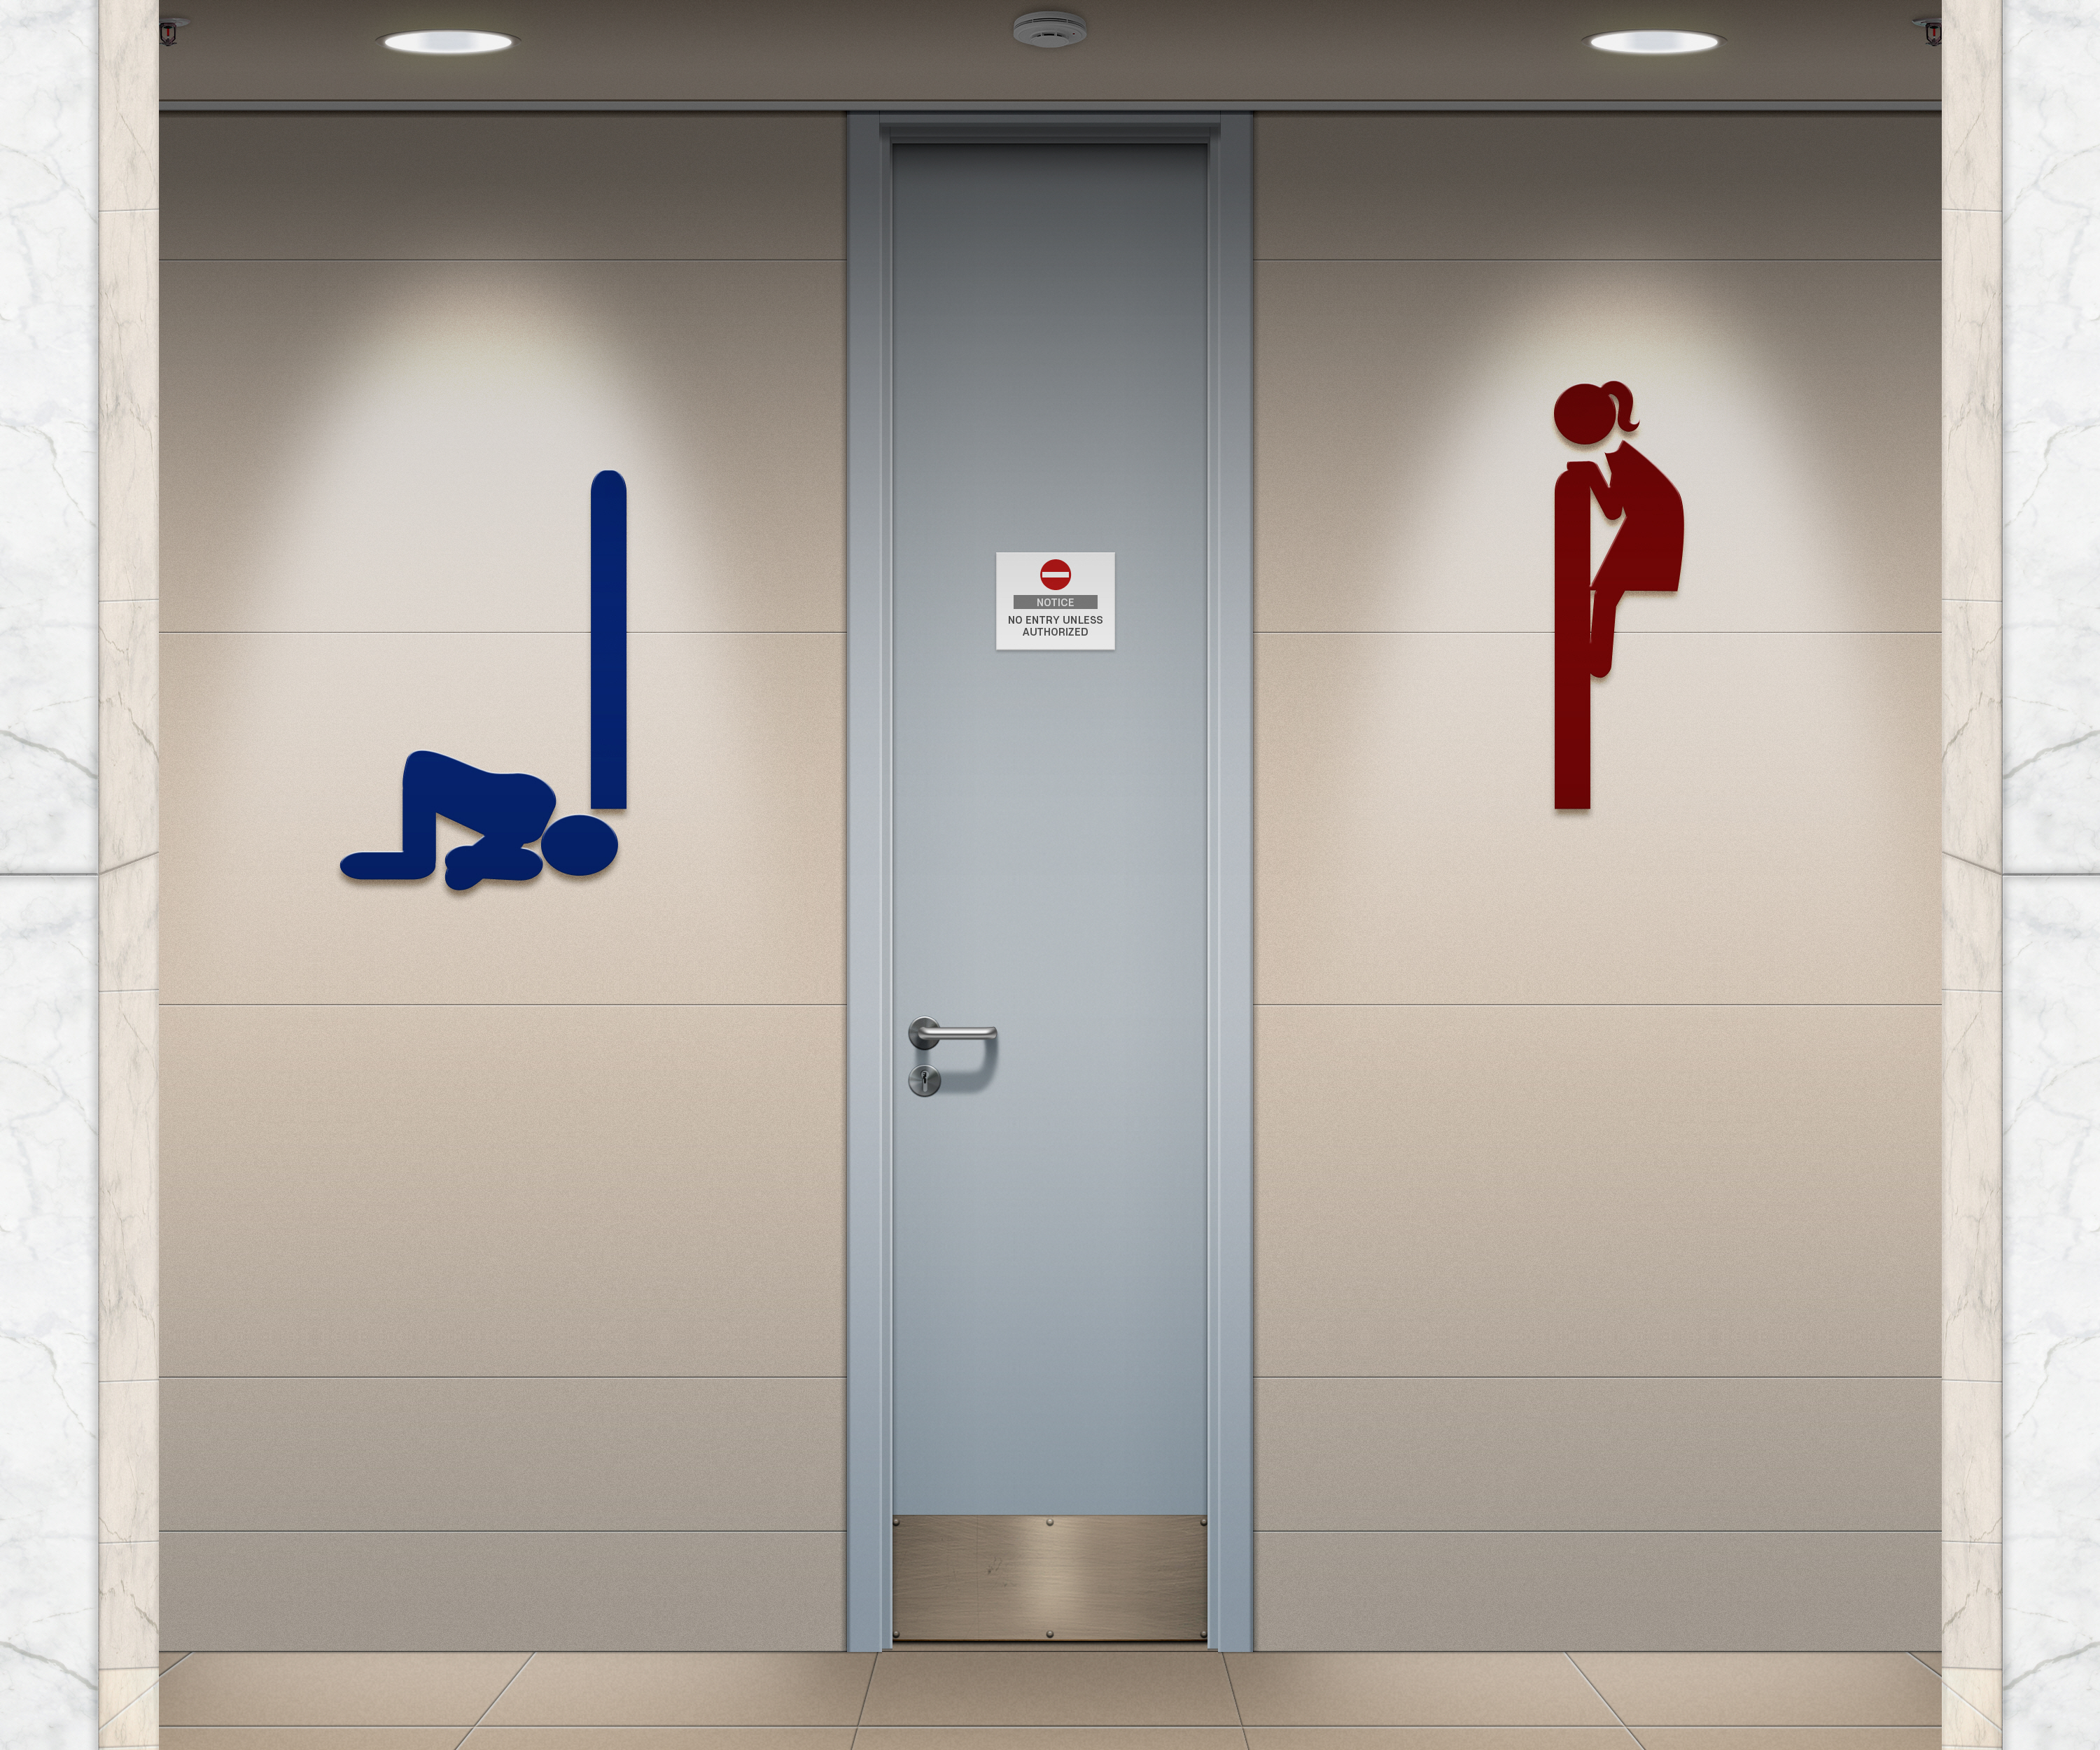 General 3000x2500 toilets public restroom sign humor